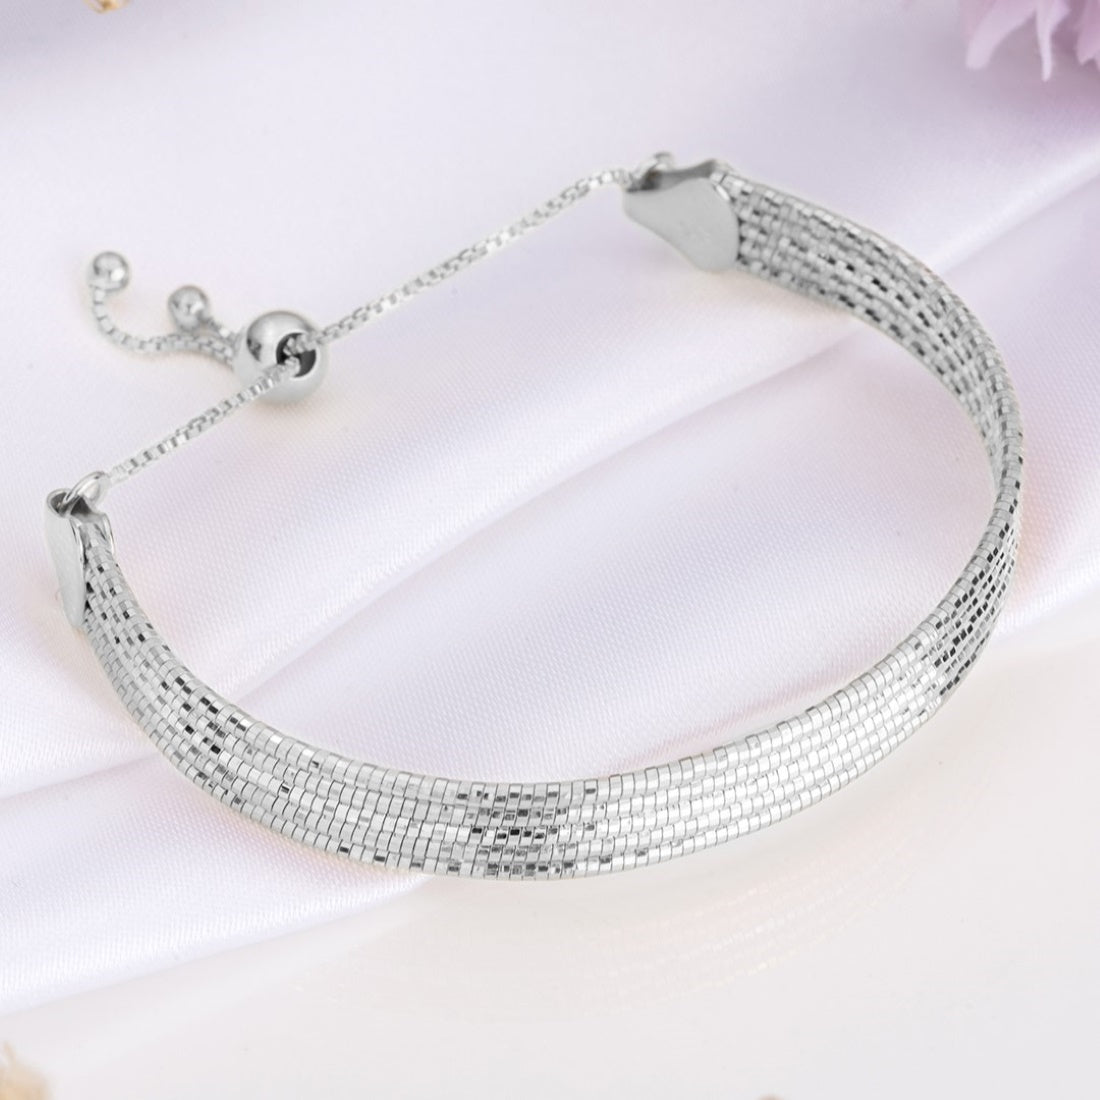 Elegance in Lines Rhodium Plated 925 Sterling Silver Five-Line Bracelet